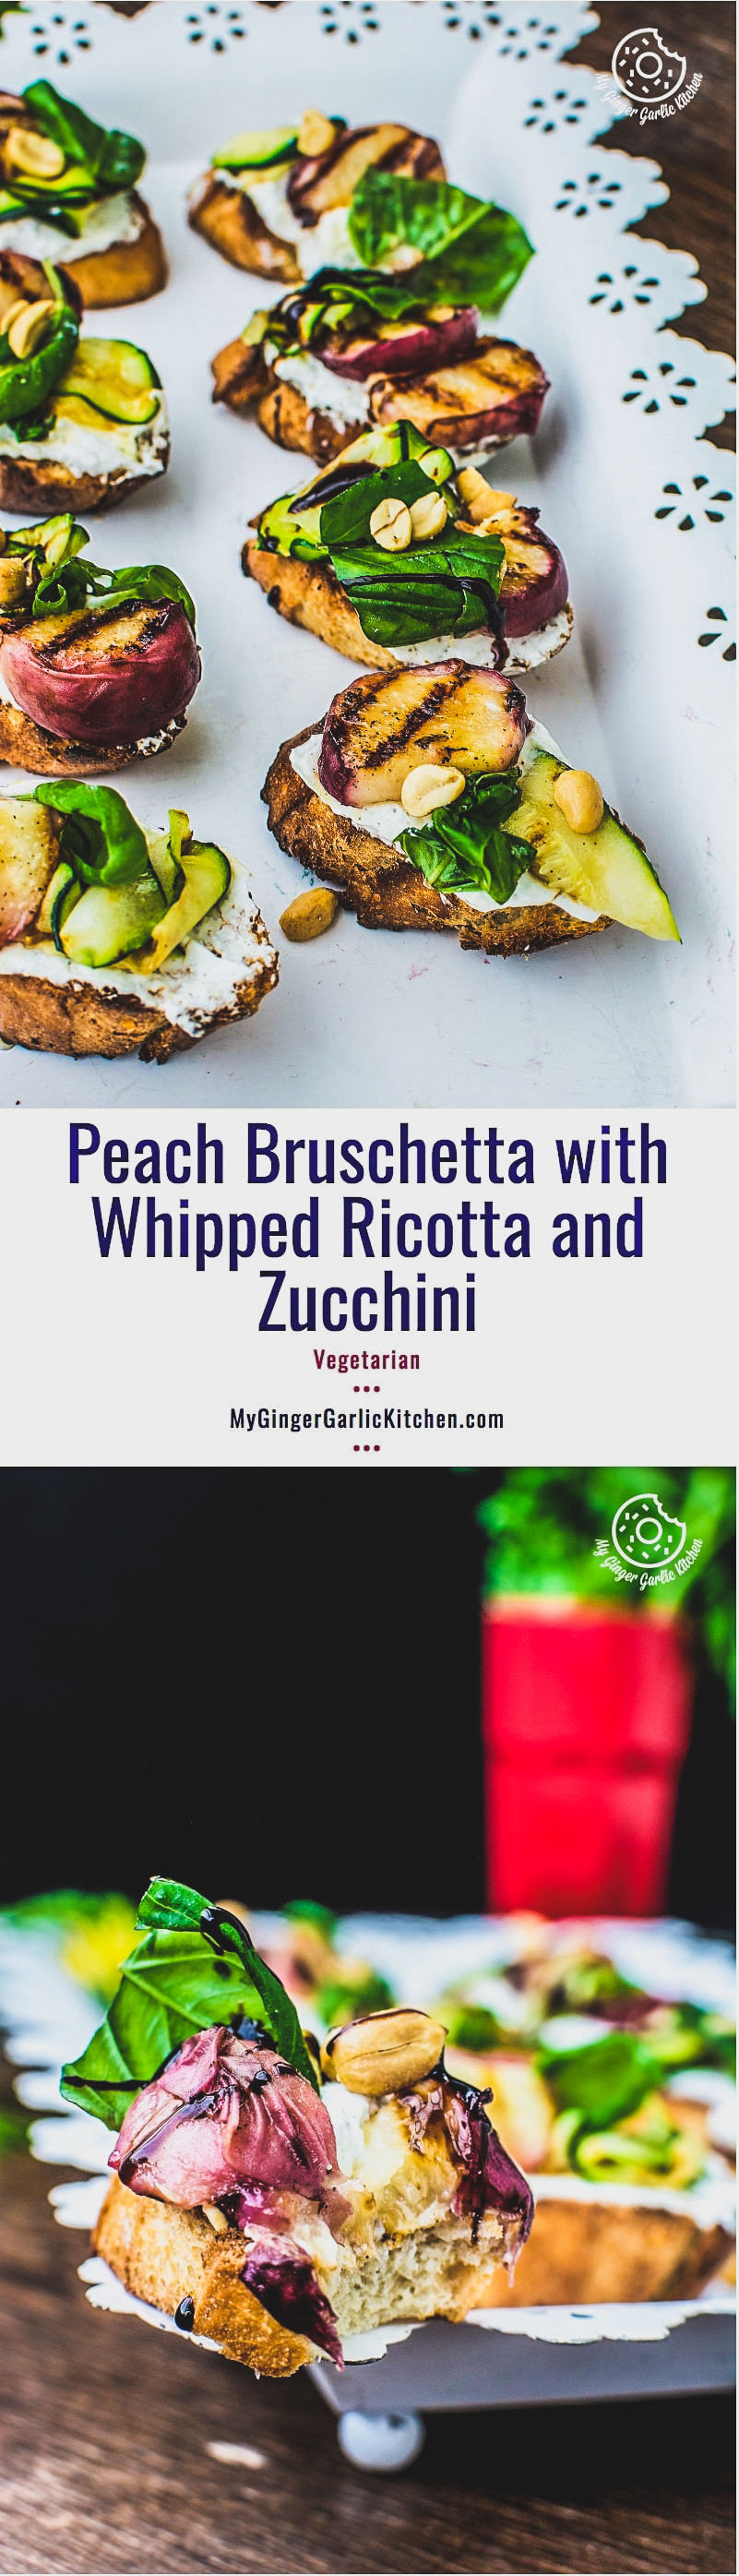 Peach Bruschetta with Whipped Ricotta and Zucchini | mygingergarlickitchen.com/ @anupama_dreams